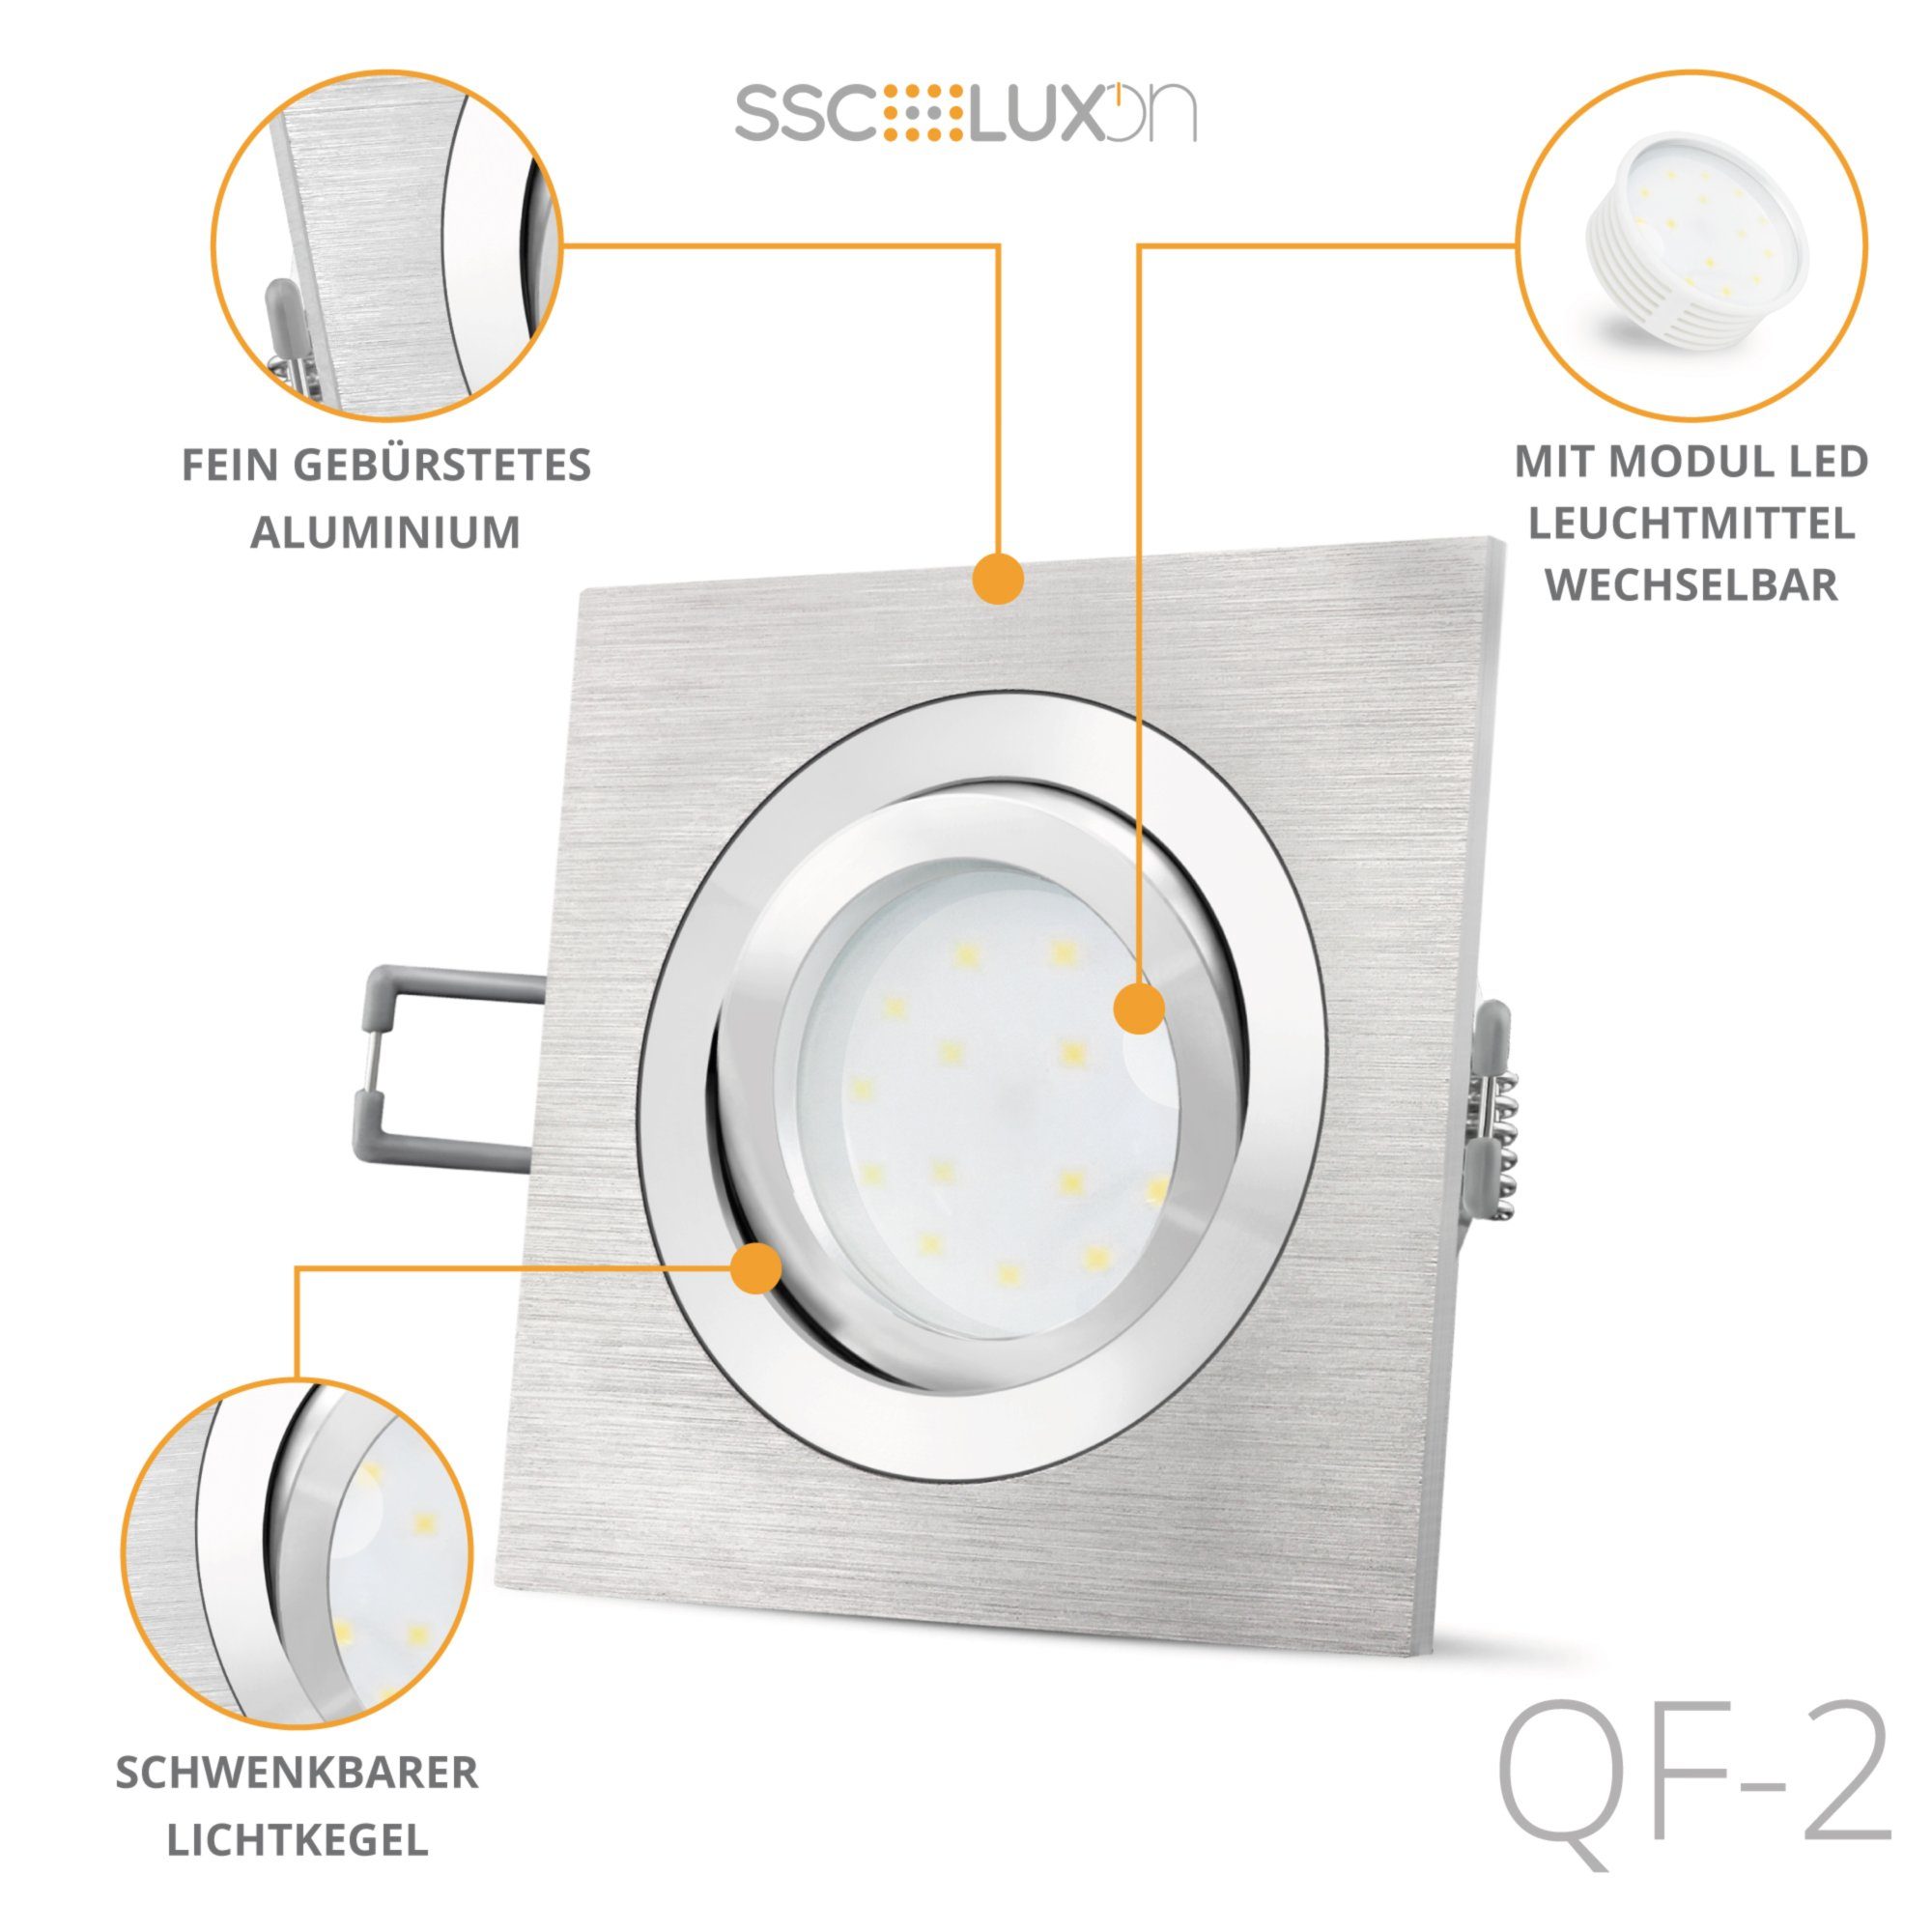 SSC-LUXon LED Einbaustrahler QF-2 Alu flach, Einbaustrahler mit & schwenkbar LED dimmbar Neutralweiß LED